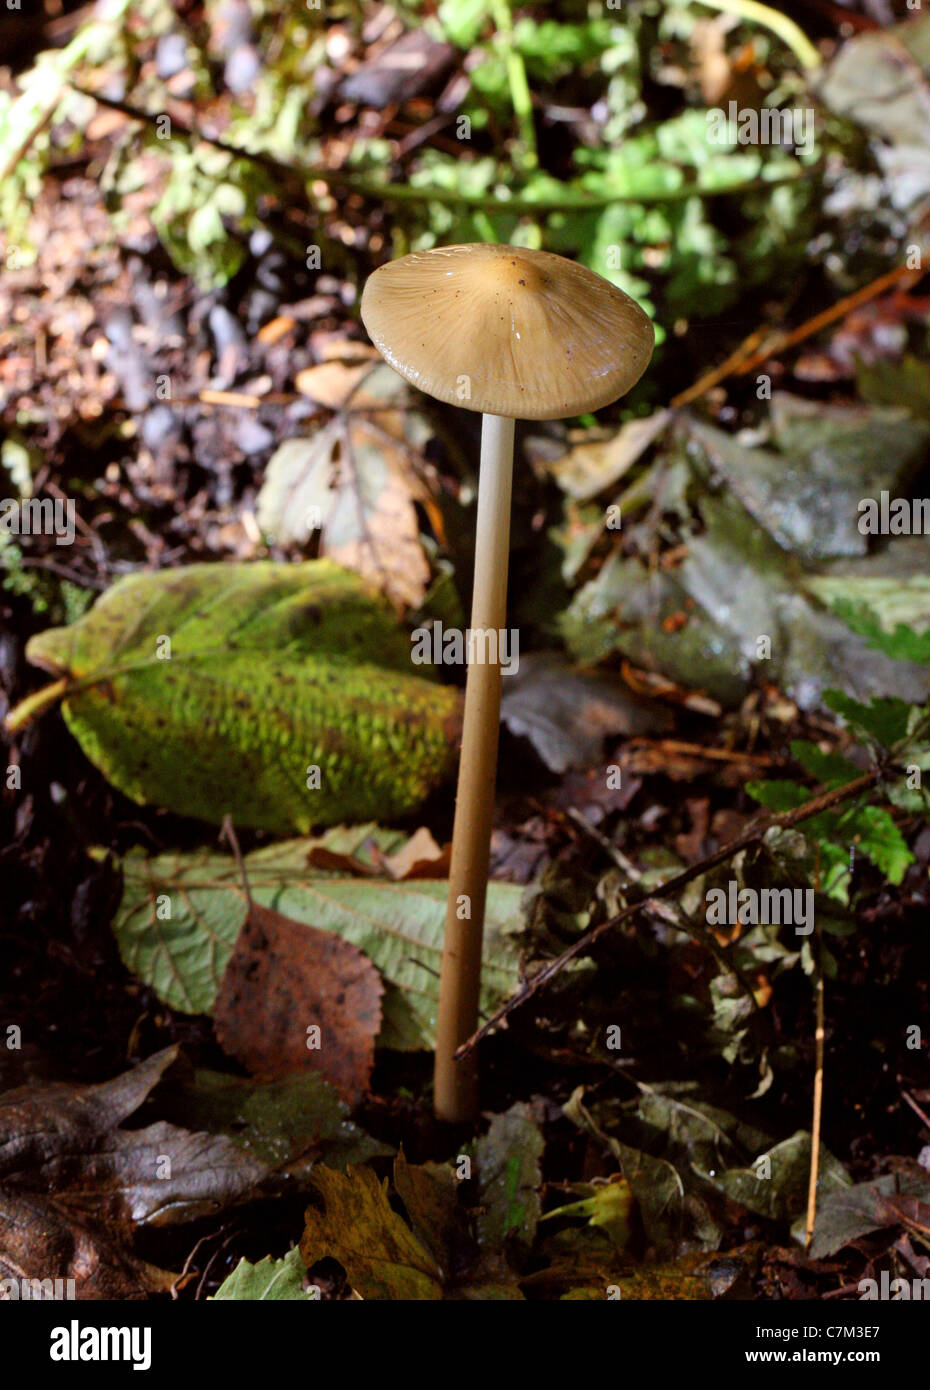 Il radicamento gambo o radice profonda di funghi, Xerula radicata (Oudemansiella radicata), Physalacriaceae. Foto Stock